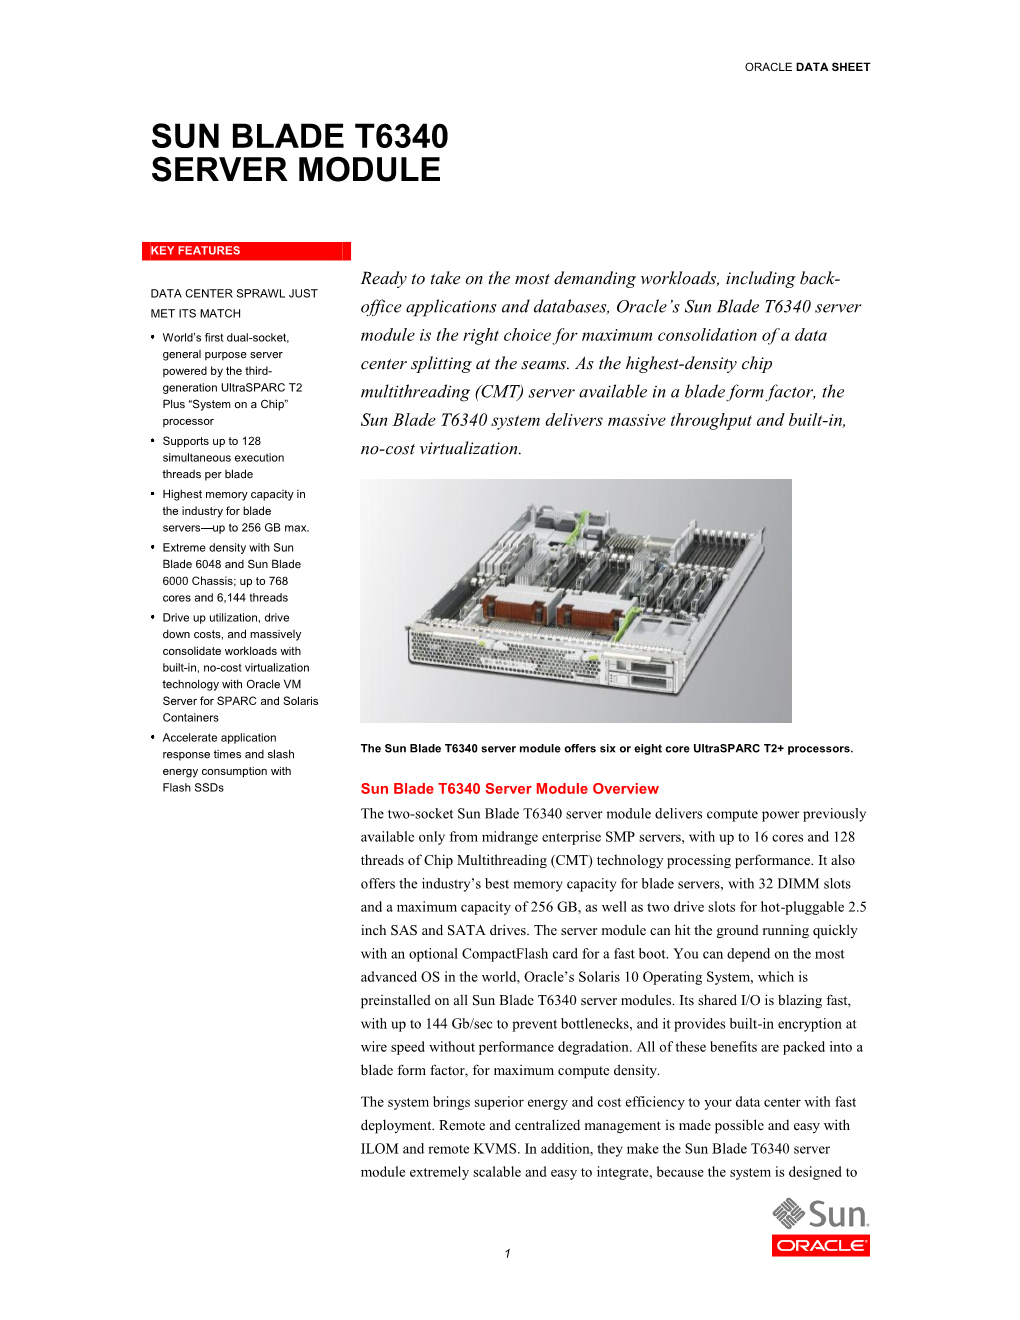 Sun Blade T6340 Server Module Data Sheet